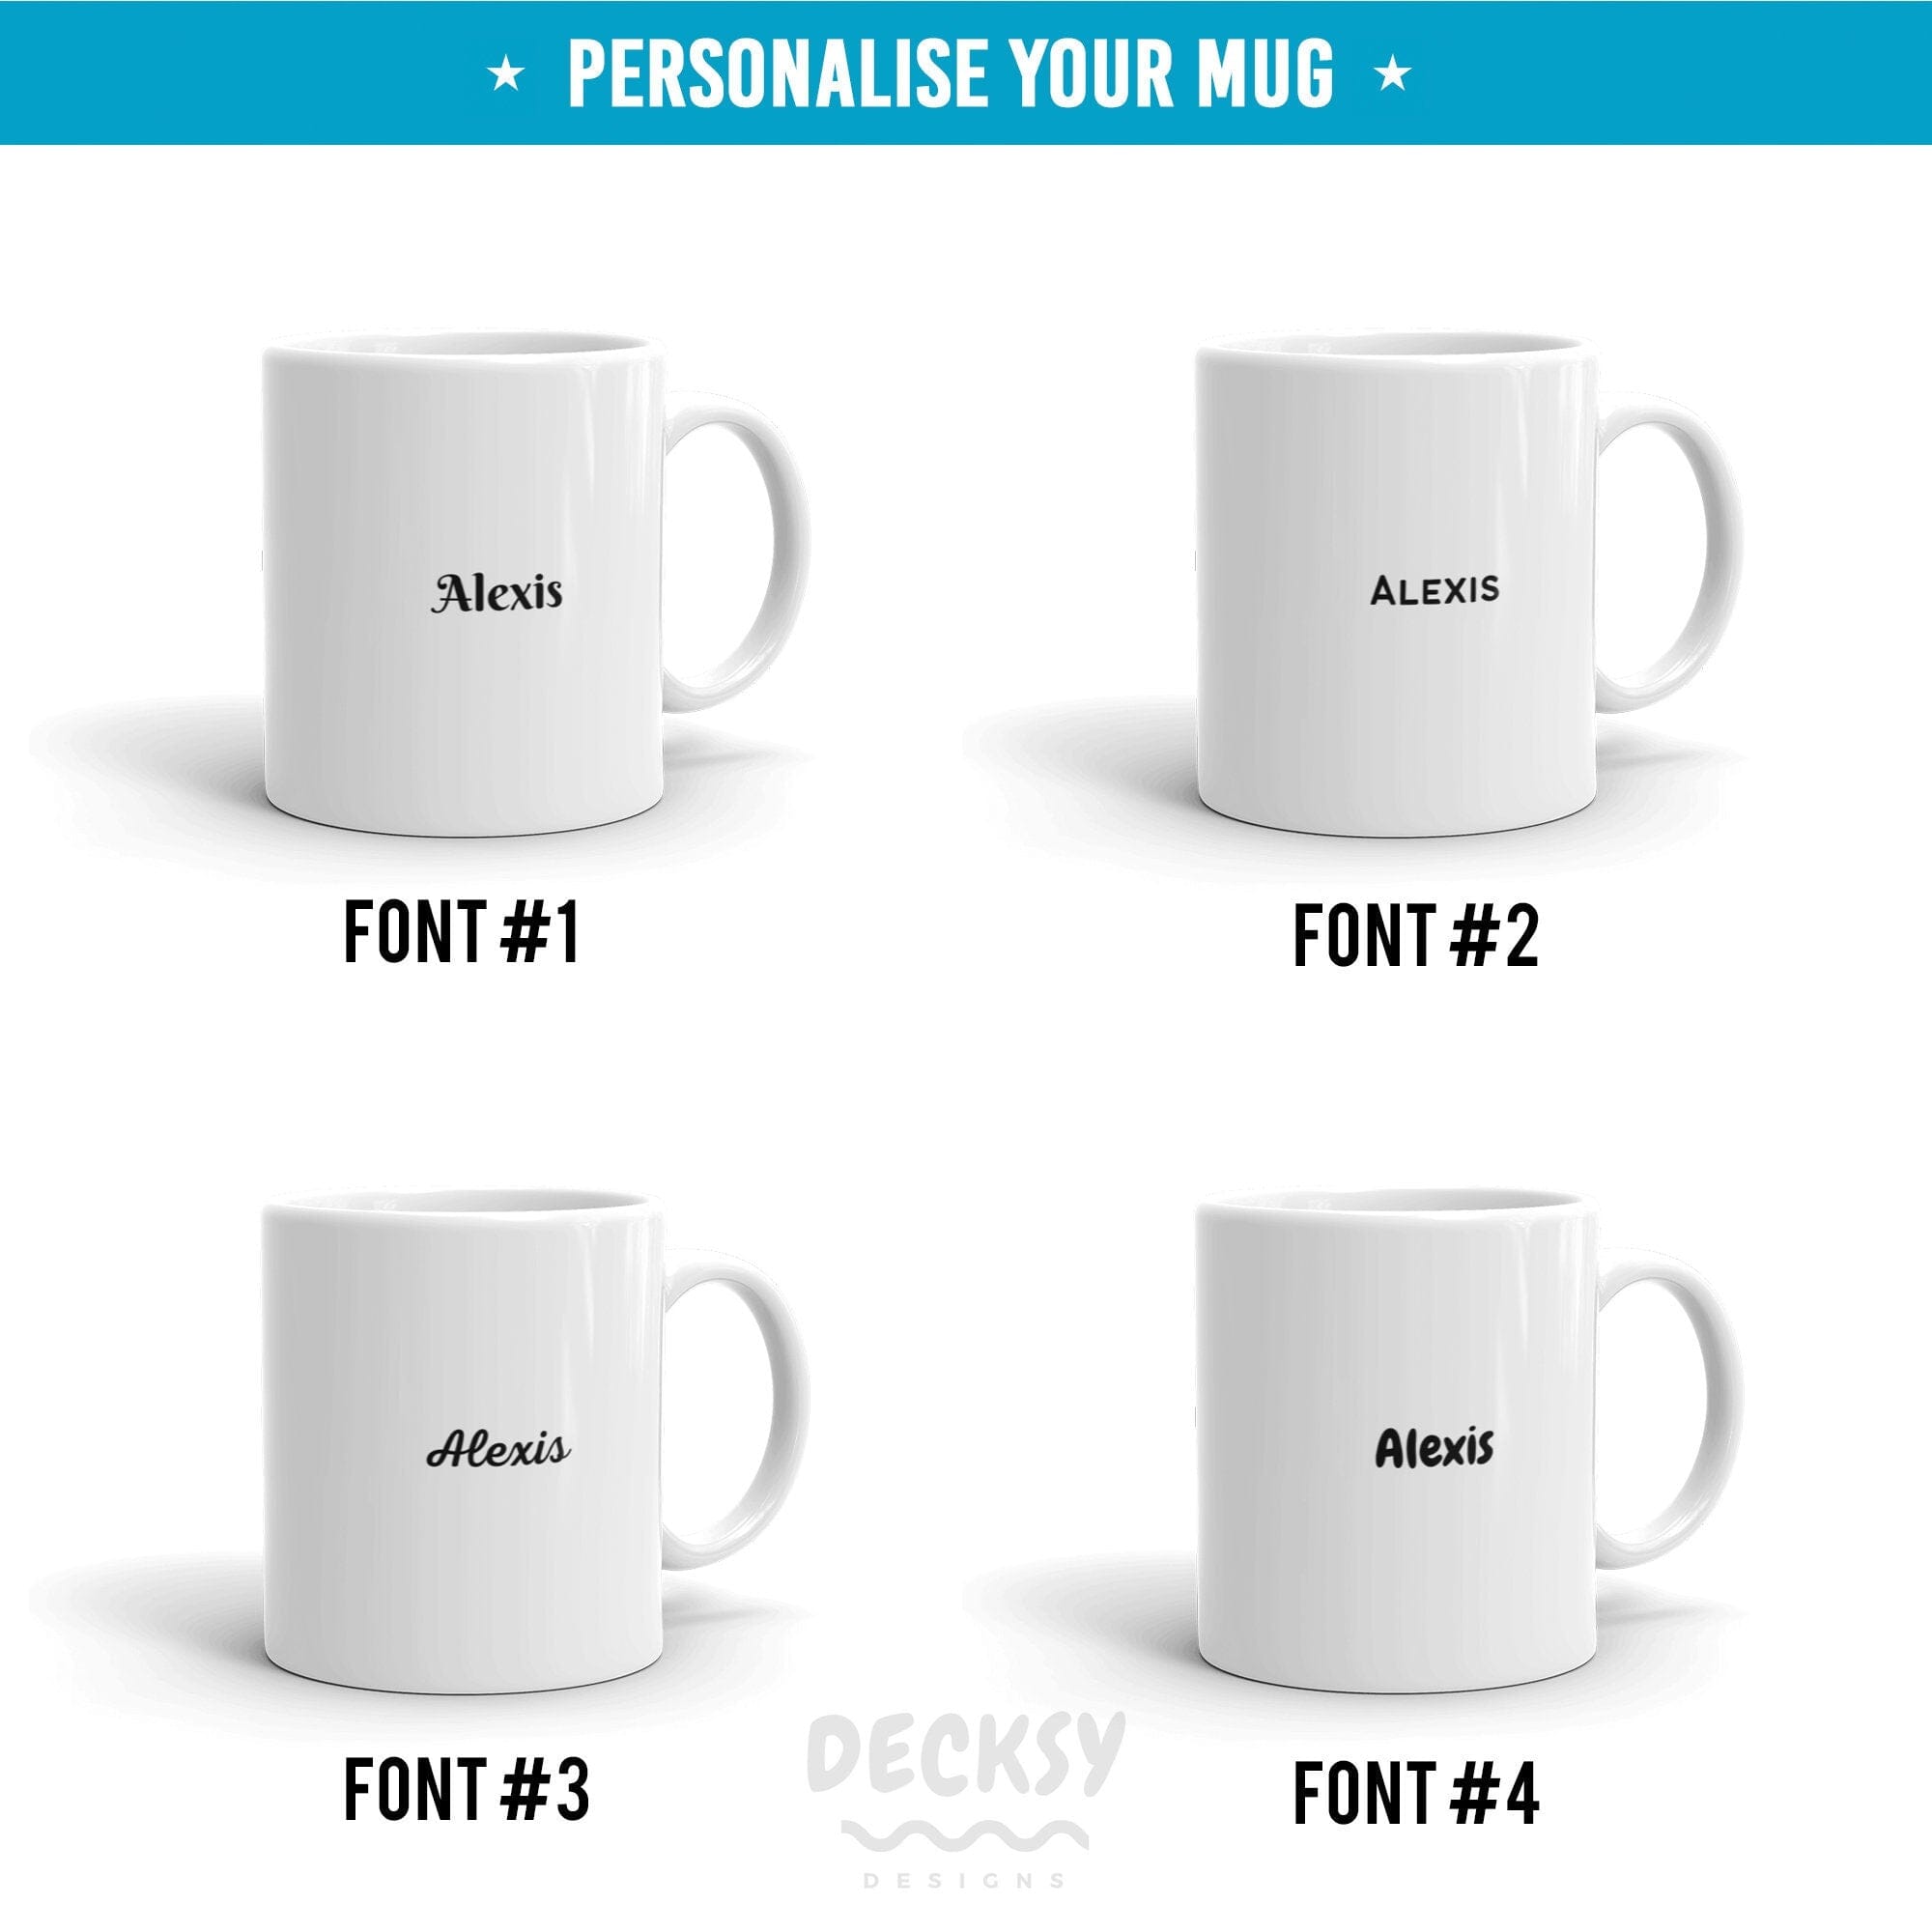 Boating Mug, Personalised Gifts For Boaters-Home & Living:Kitchen & Dining:Drink & Barware:Drinkware:Mugs-DecksyDesigns-White Mug 11 oz-NO PERSONALISATION-DecksyDesigns